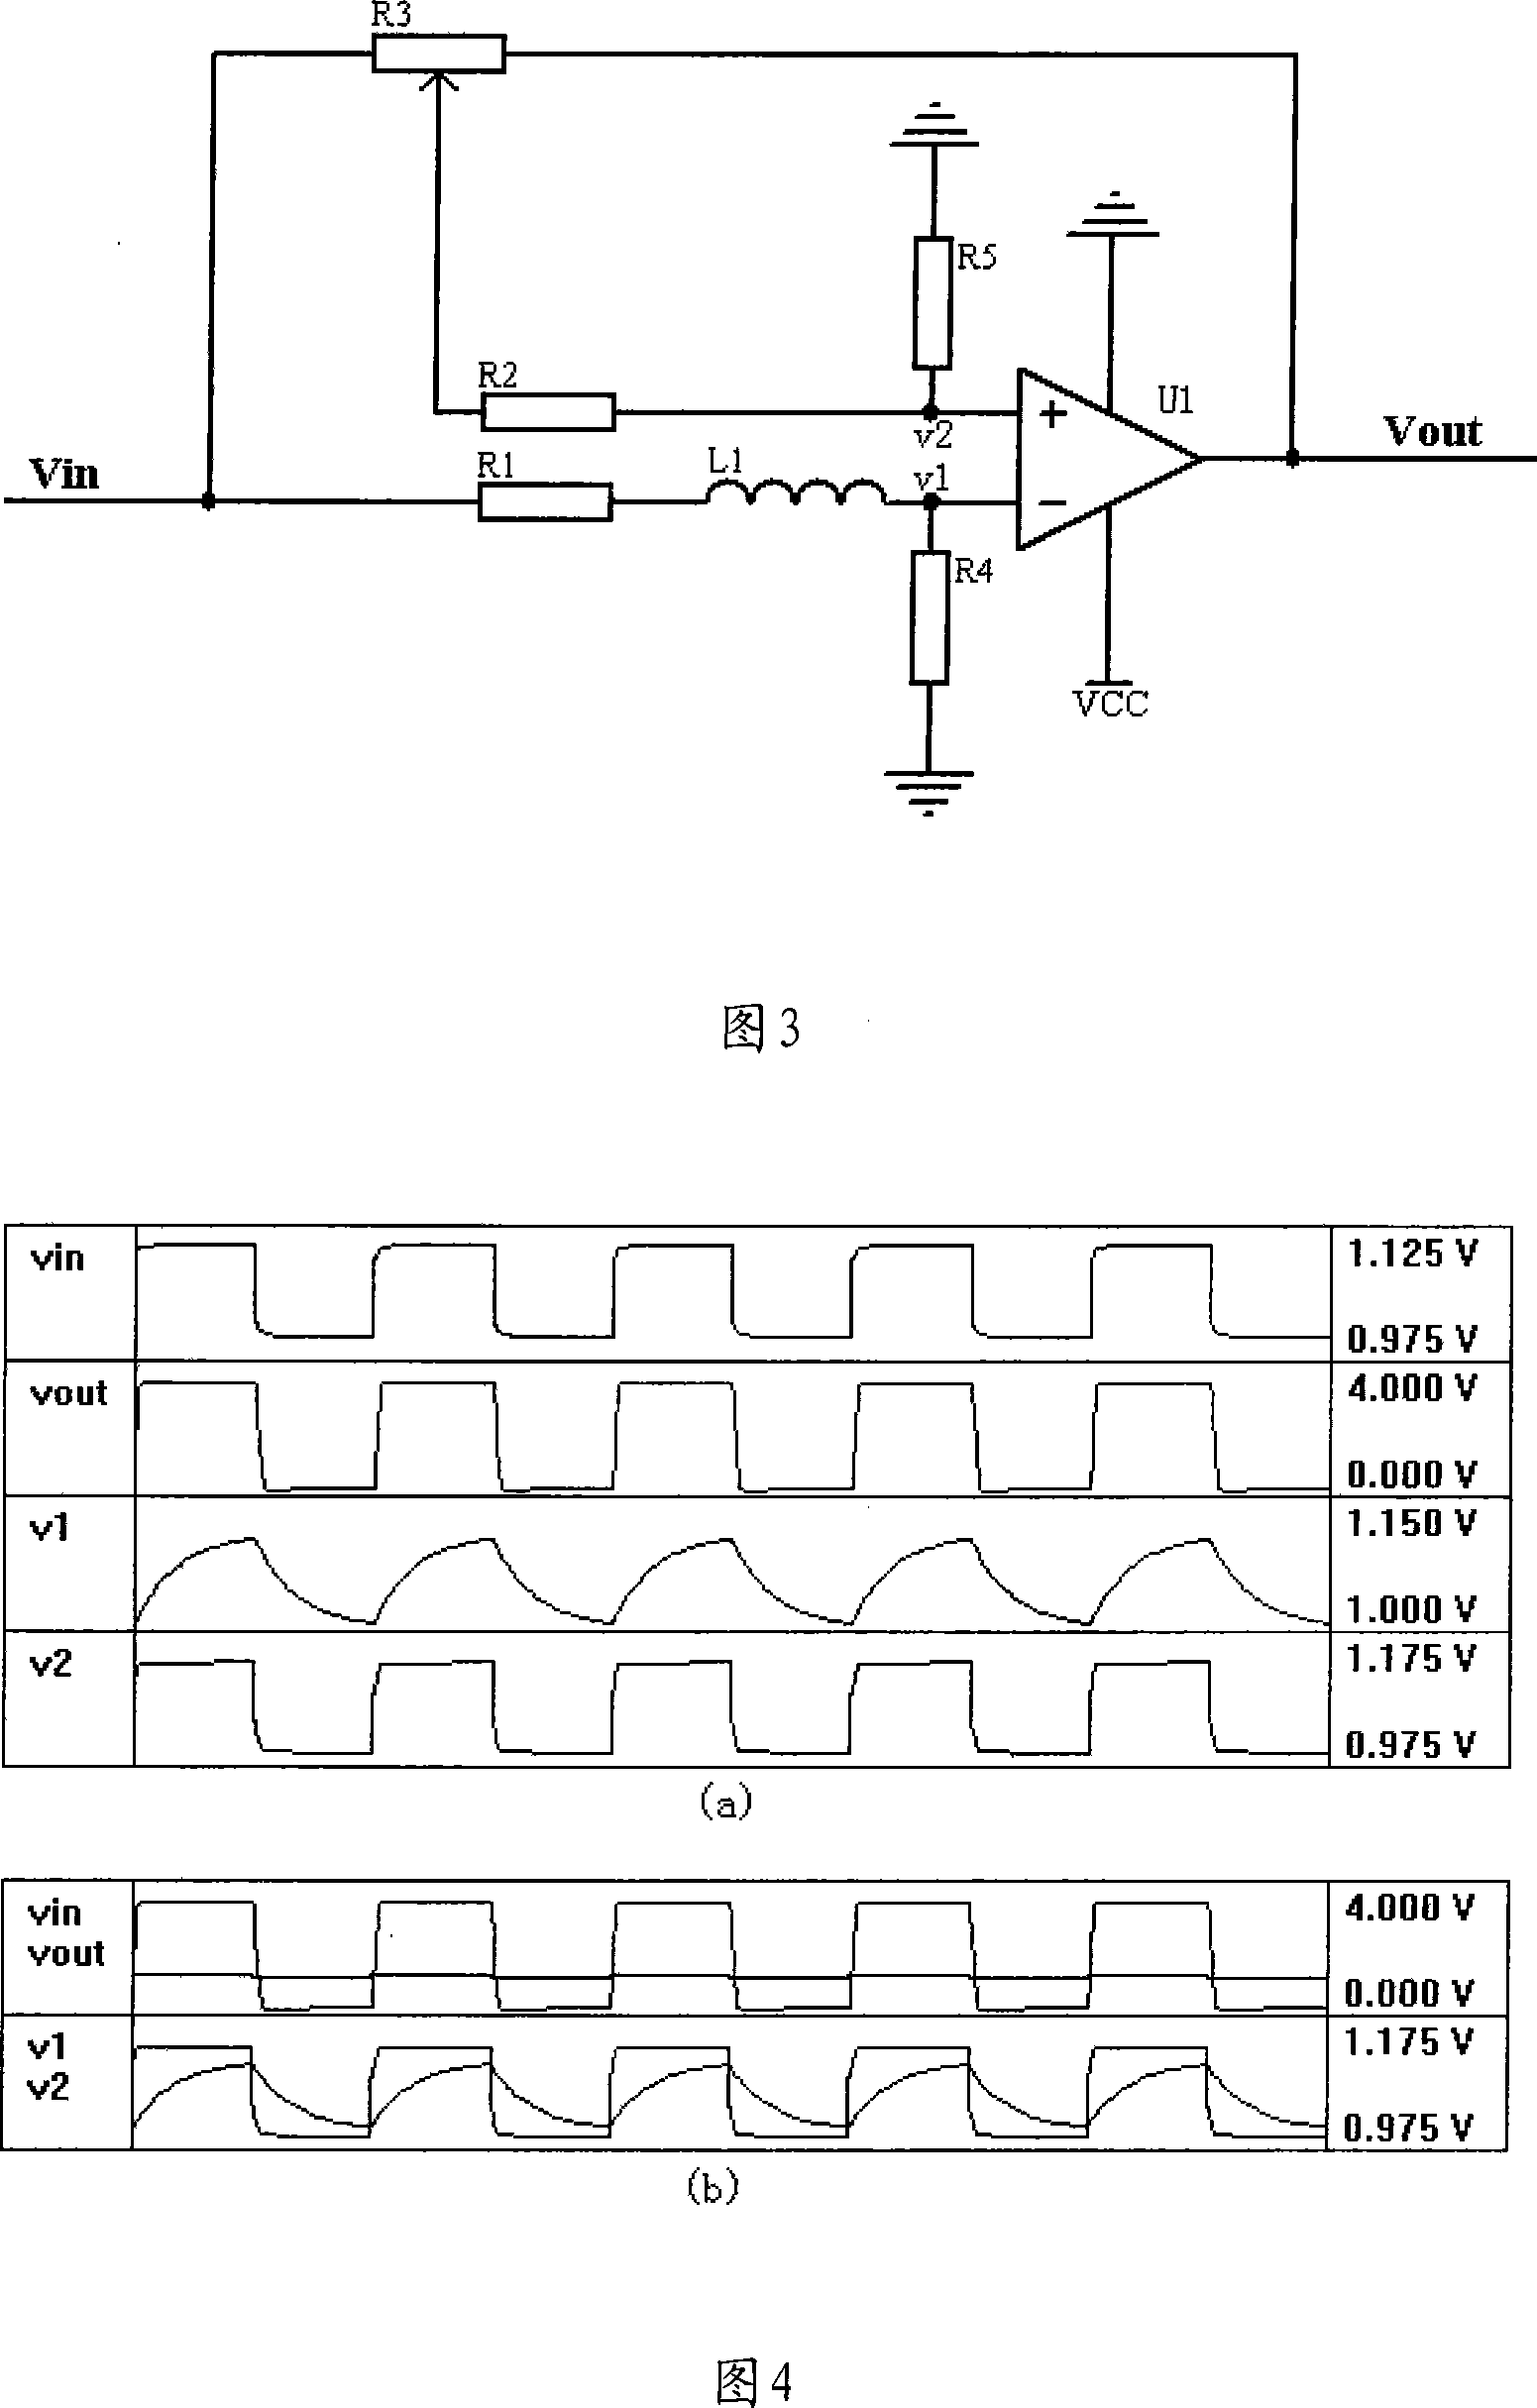 Waveform shaping circuit